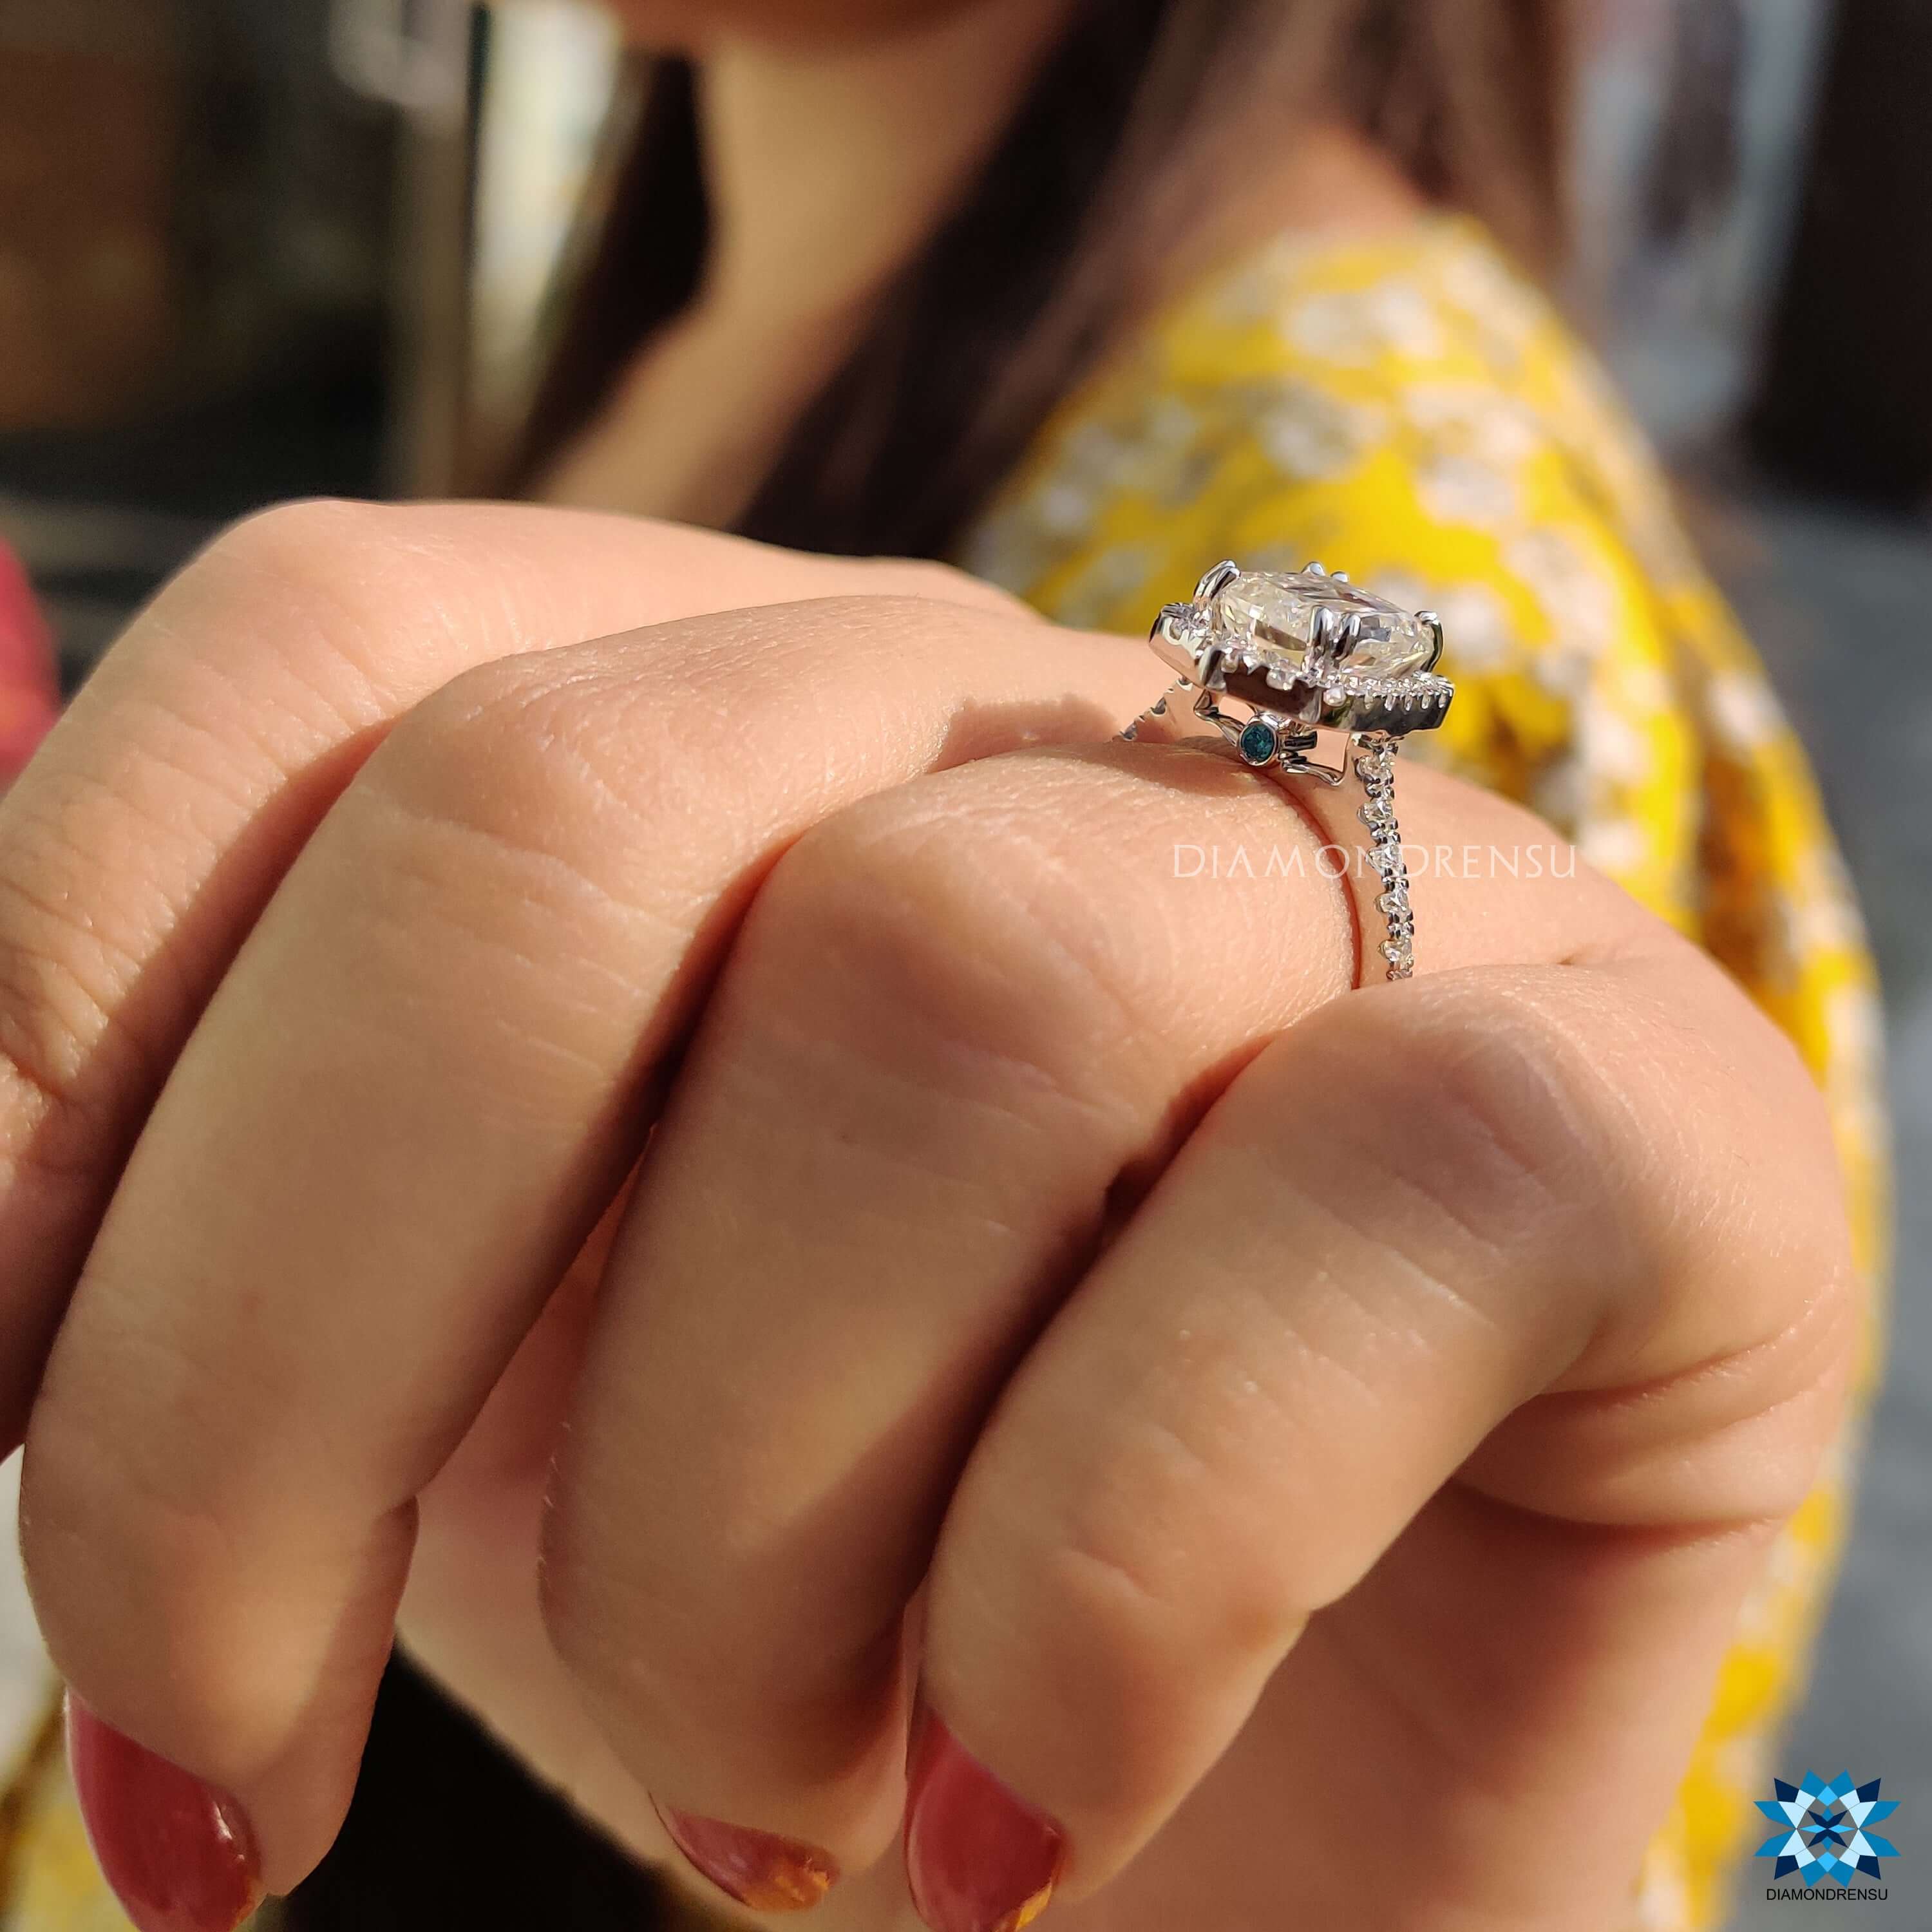 Astonishing 18k Yellow Gold Diamond Ring, Beautiful Bridal Statement Ring, Anniversary  Gift for Wife - Etsy | White gold rings, Yellow gold diamond ring, White  gold jewelry